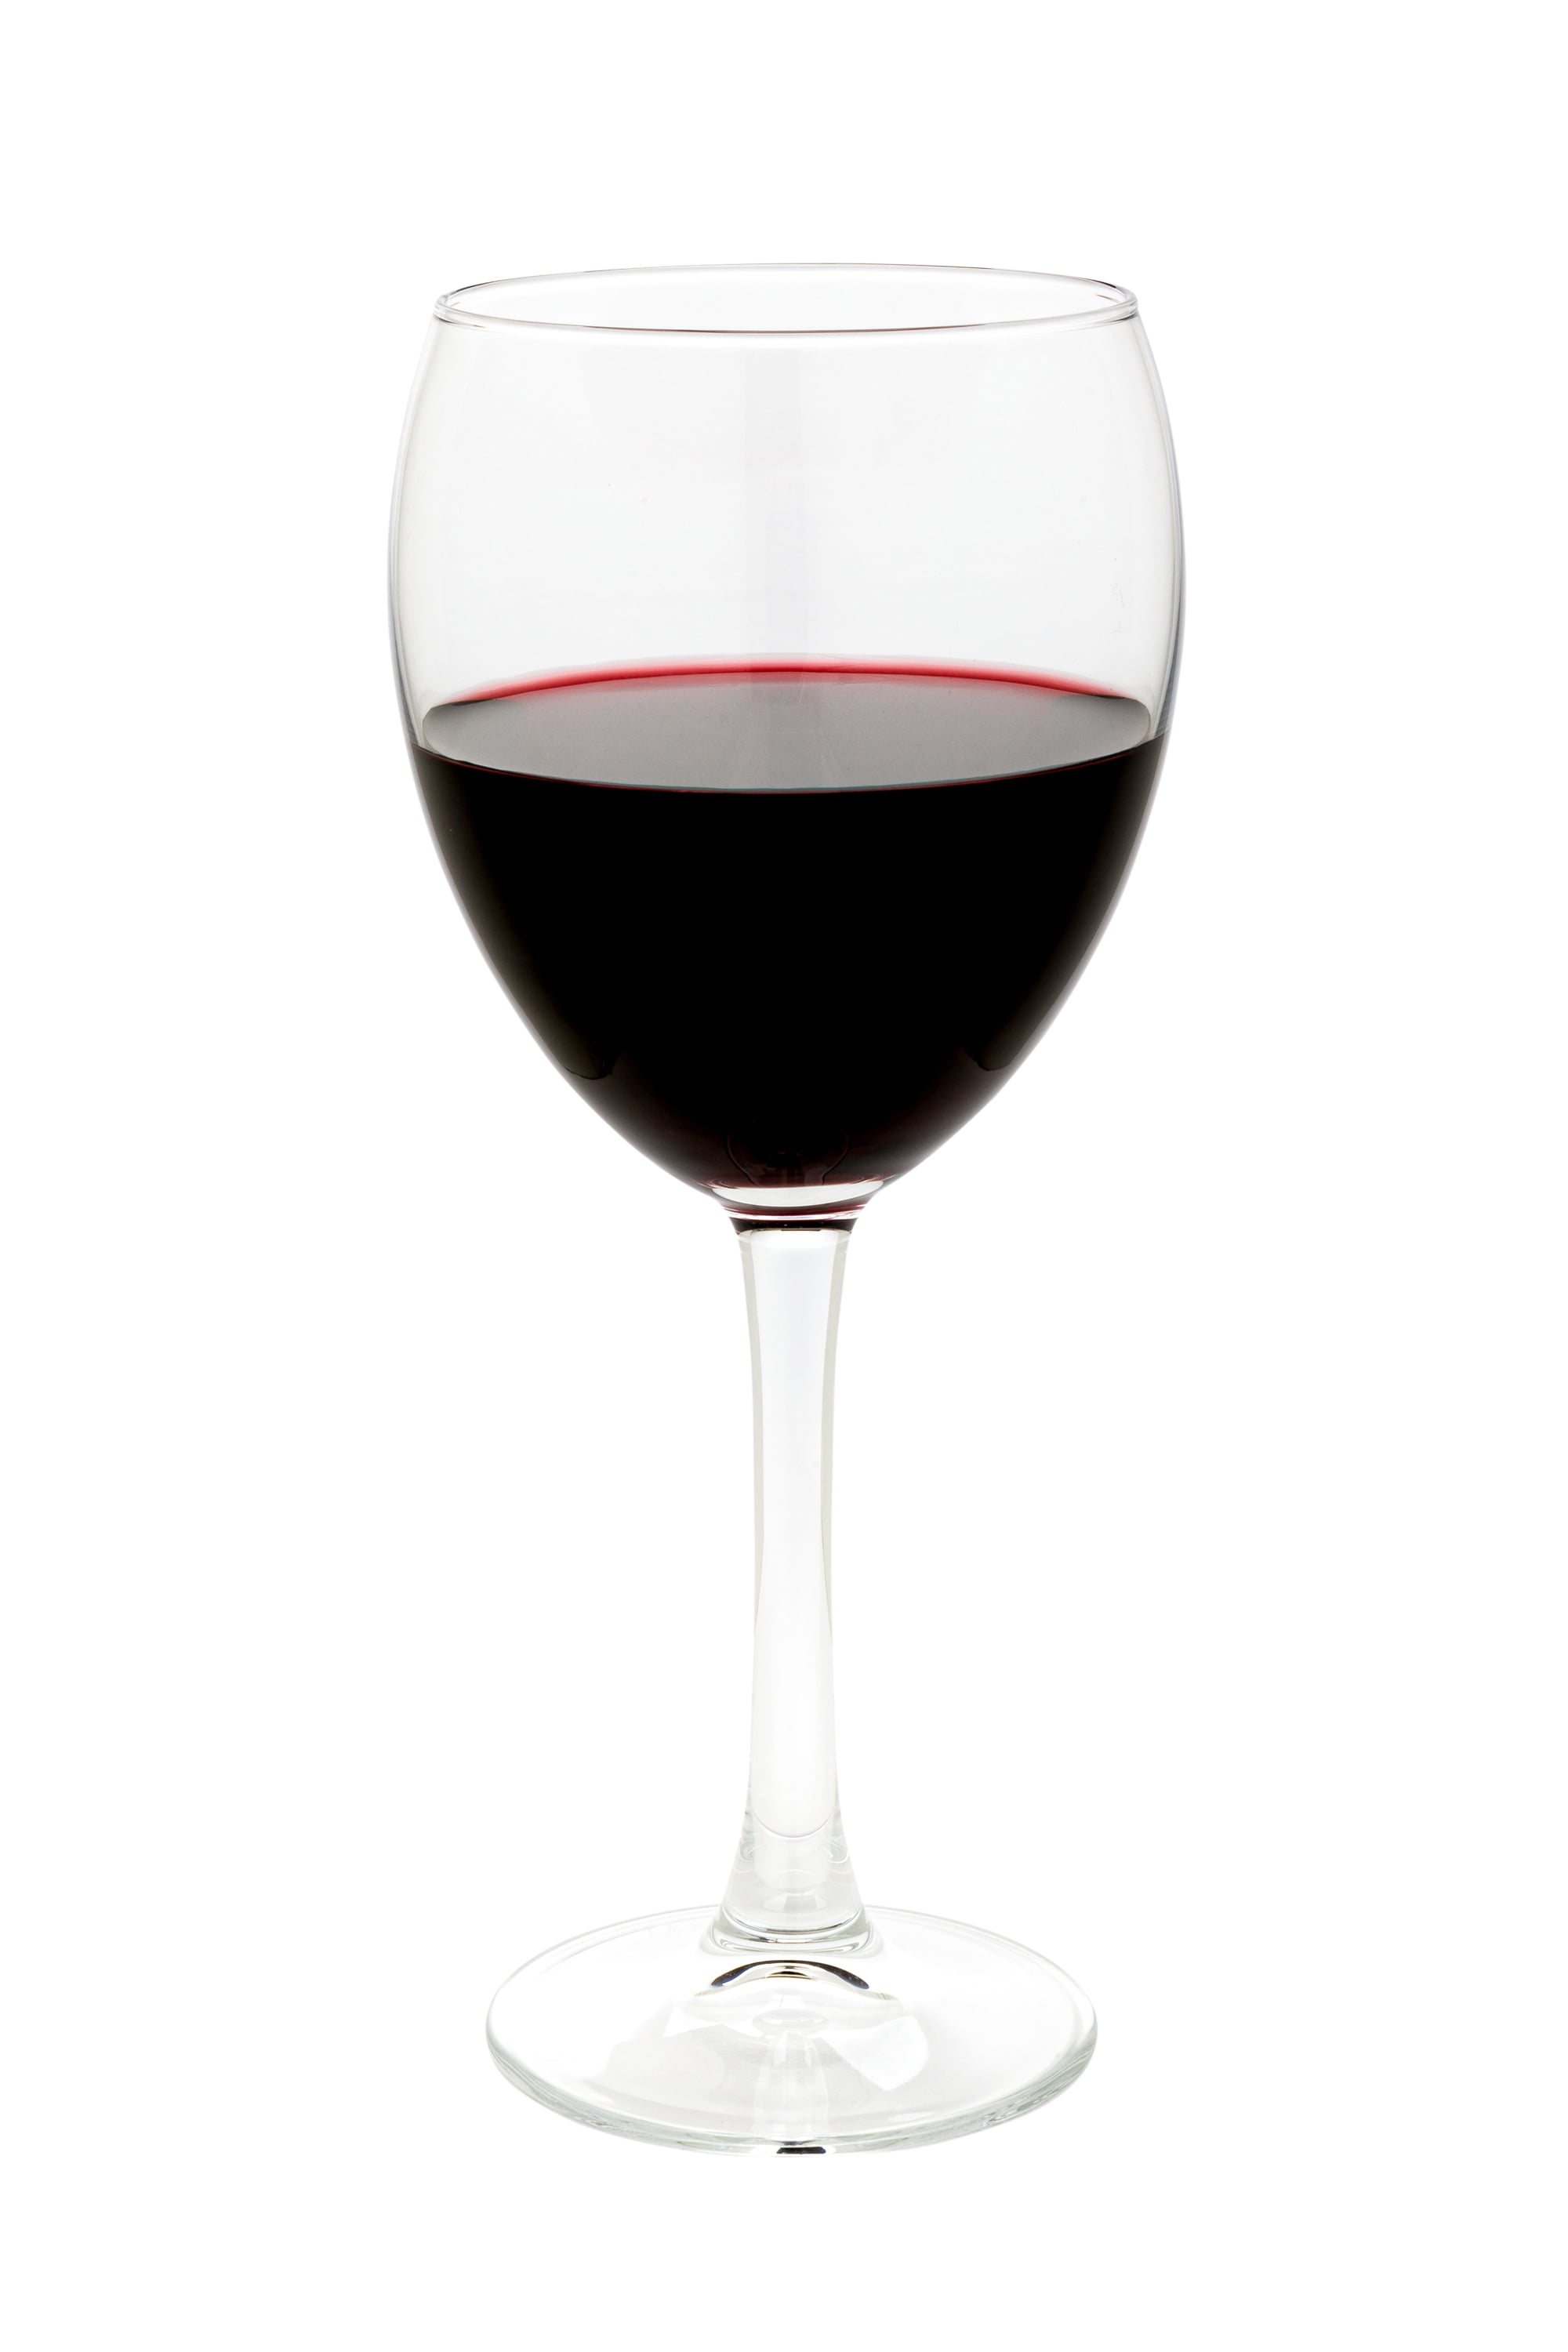 Cascata 13 oz Balloon Red Wine Glass - 3 3/4 x 3 3/4 x 7 - 6 count box